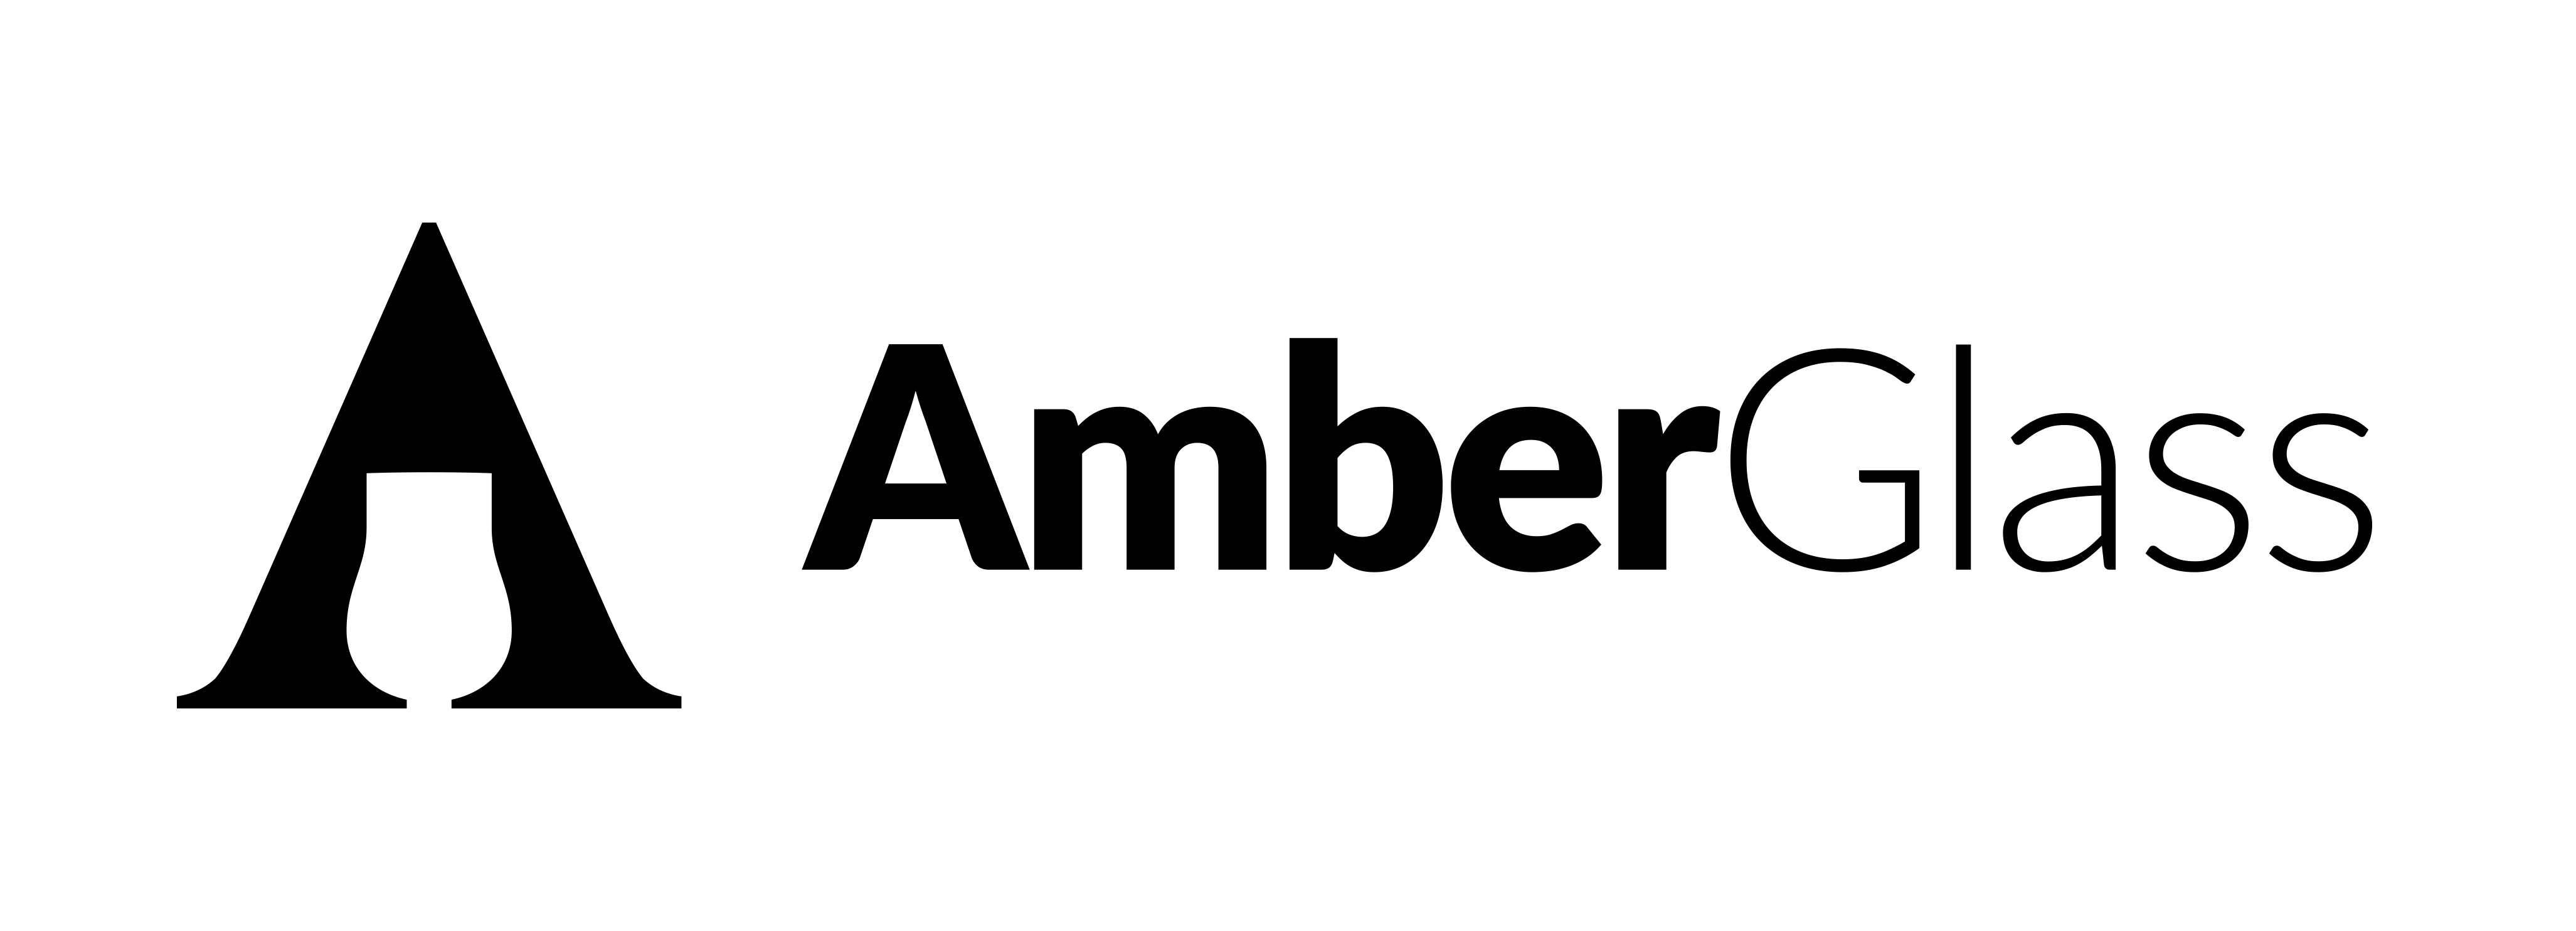 Amber glass logo